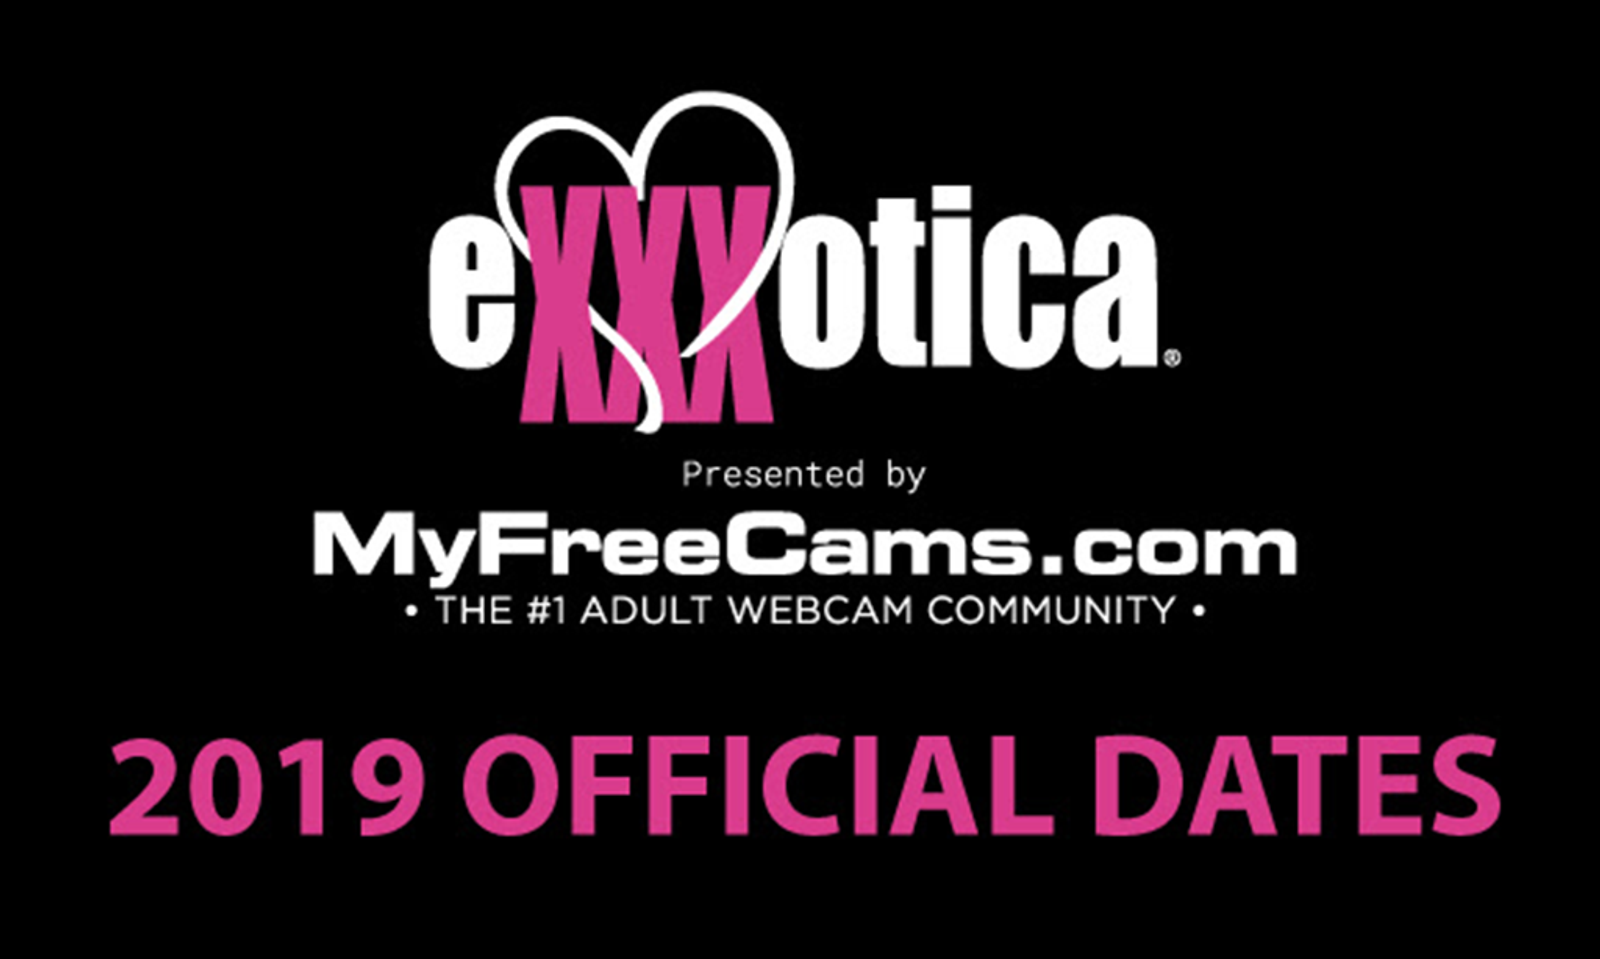 3X Events Announces 2019 Dates for Exxxotica Expos